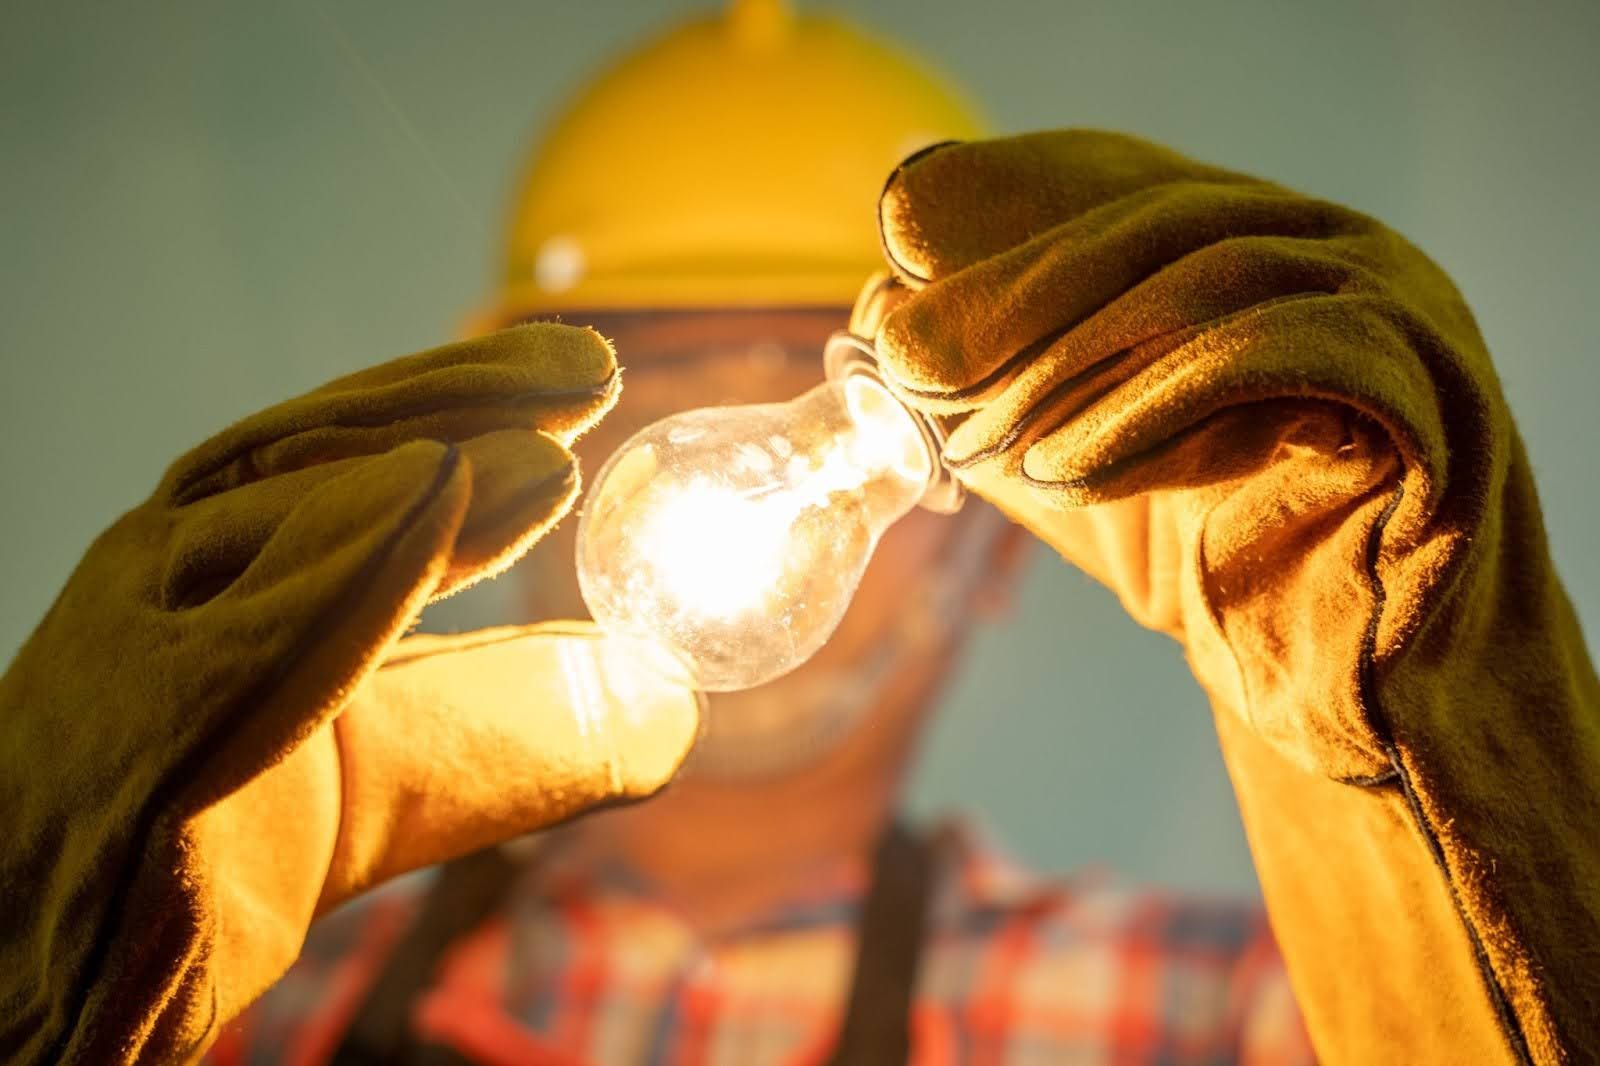 Electrician holding a lit lightbulb